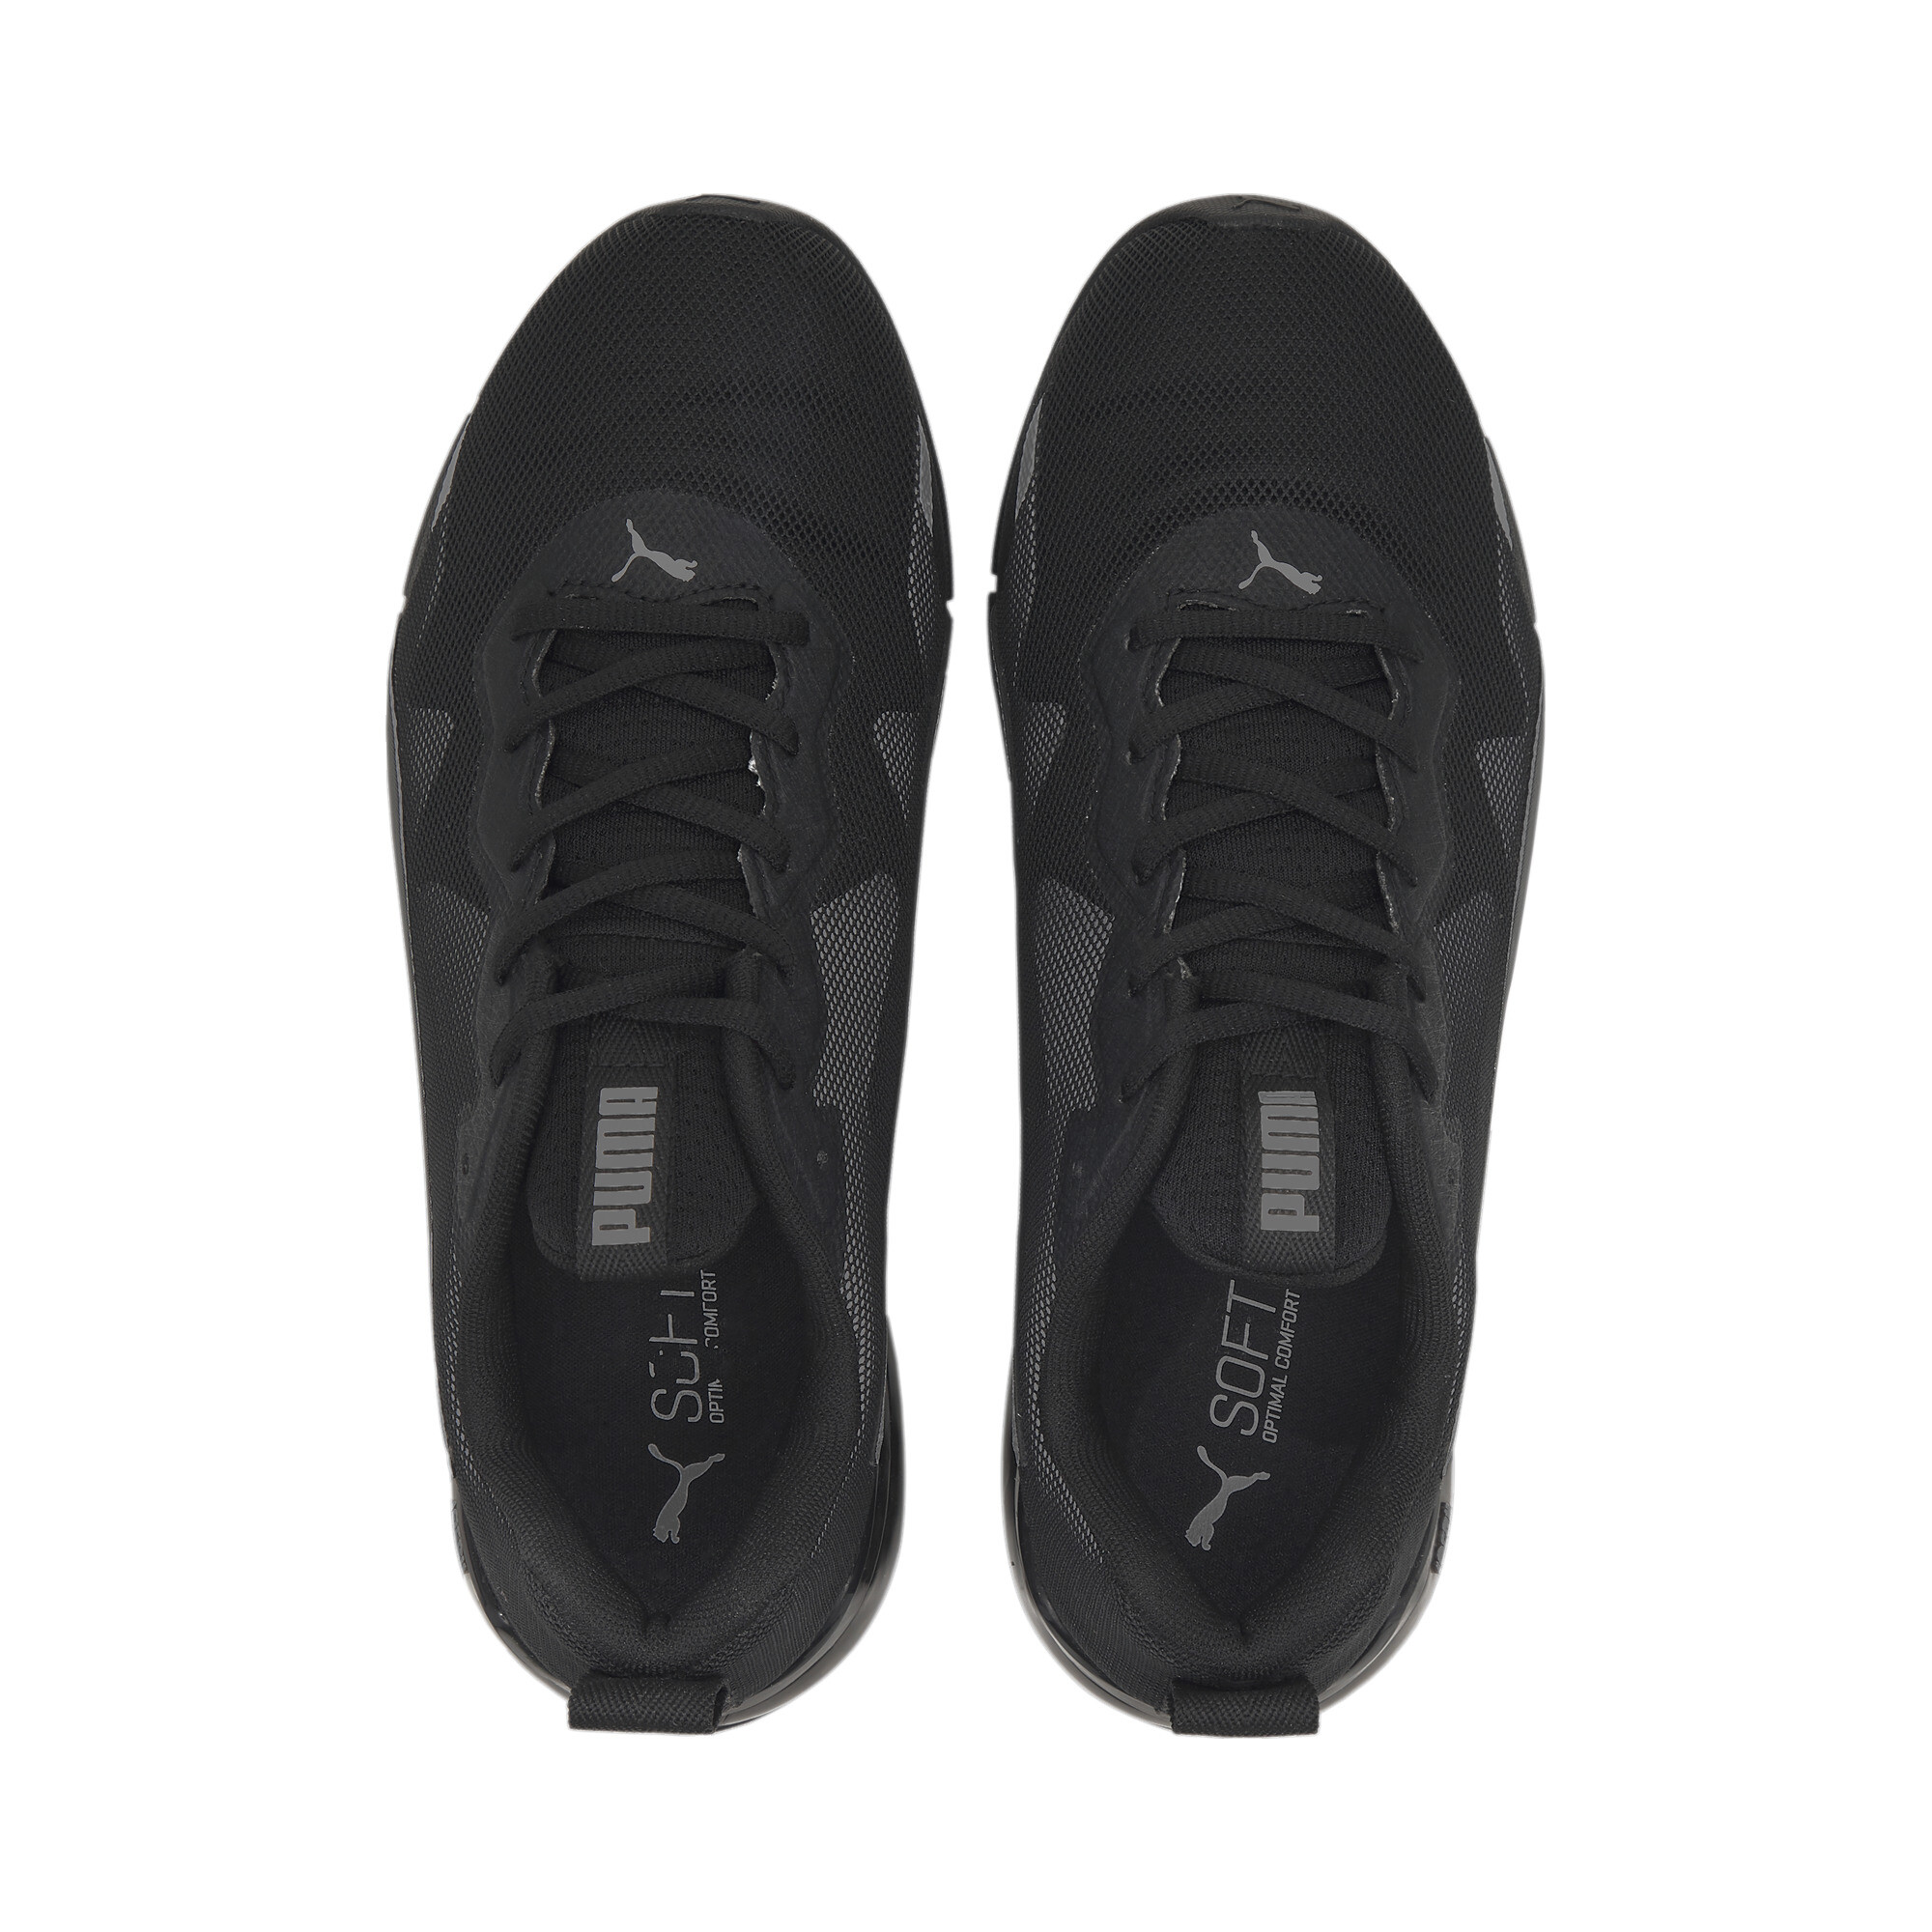 PUMA Men's CELL Valiant Training Shoes | eBay